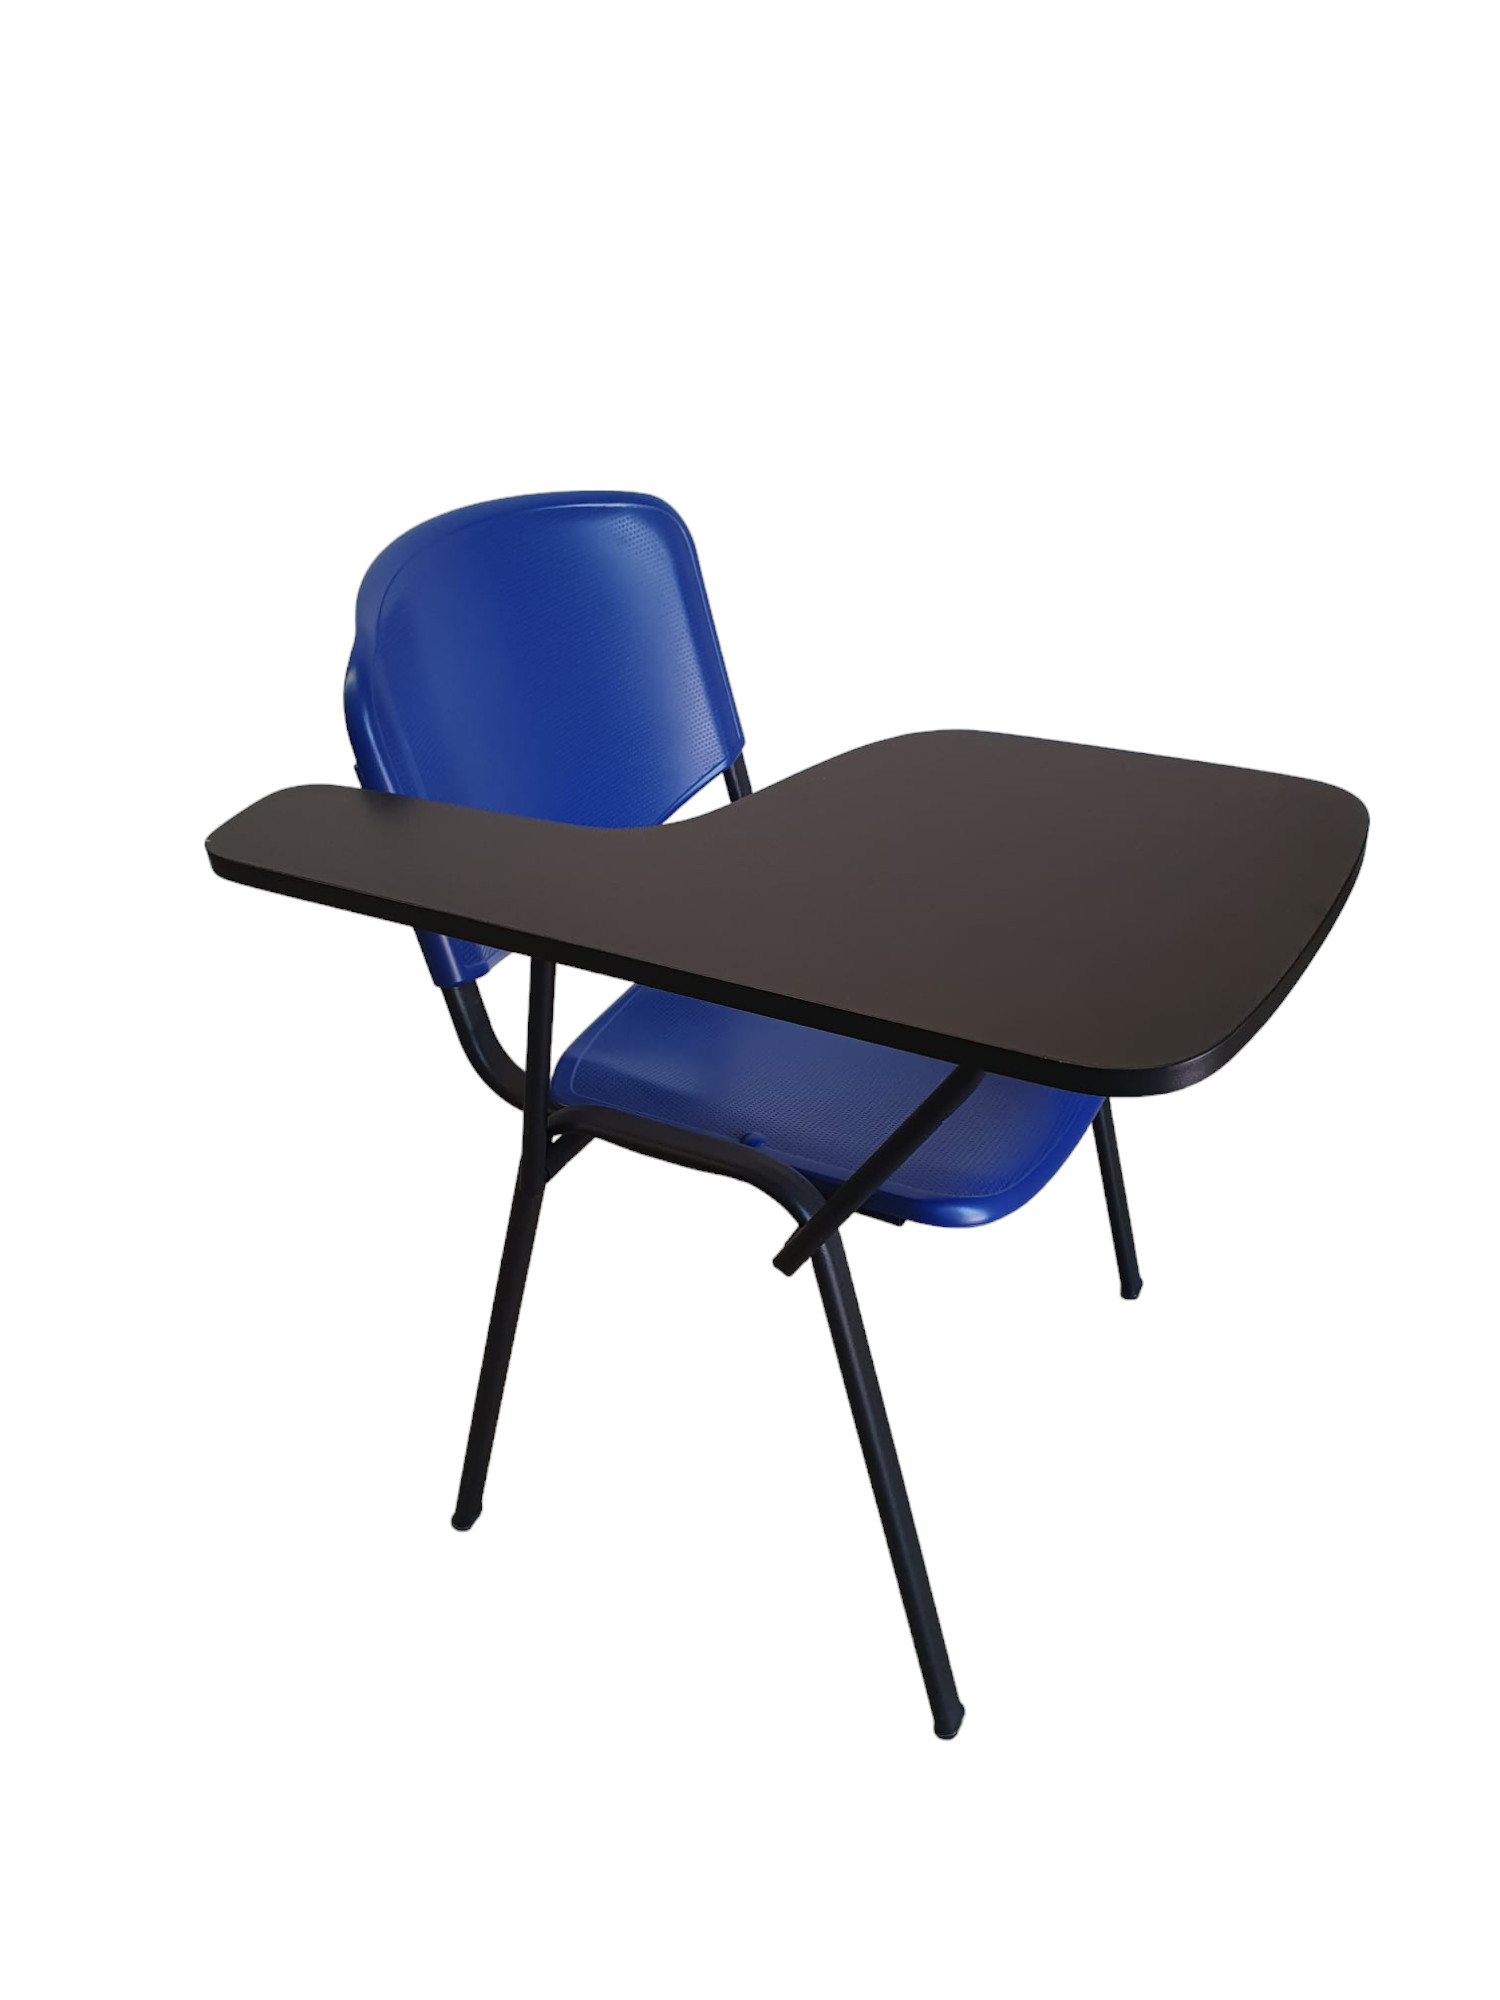 silla azul pvc con pala alargada